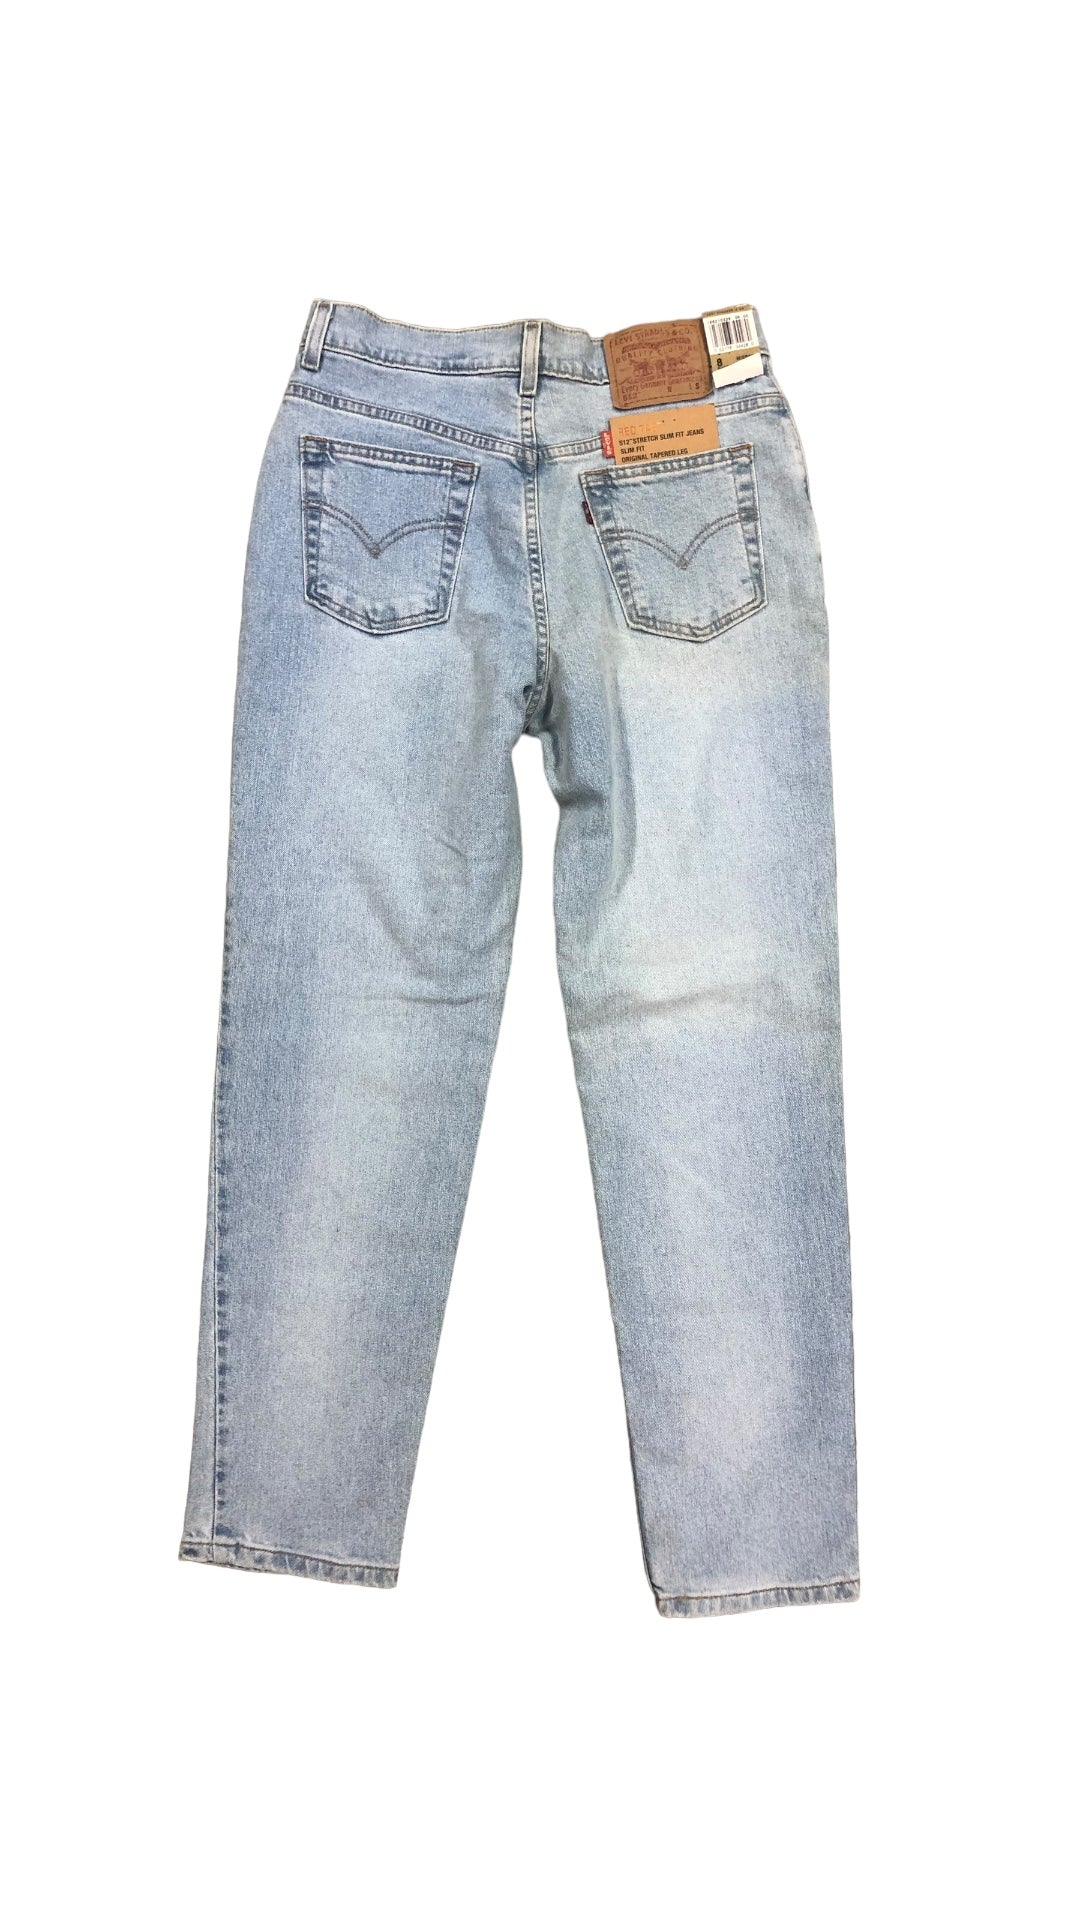 VTG Levi's Stretch Slim Fit Blue Jeans Sz 30x28